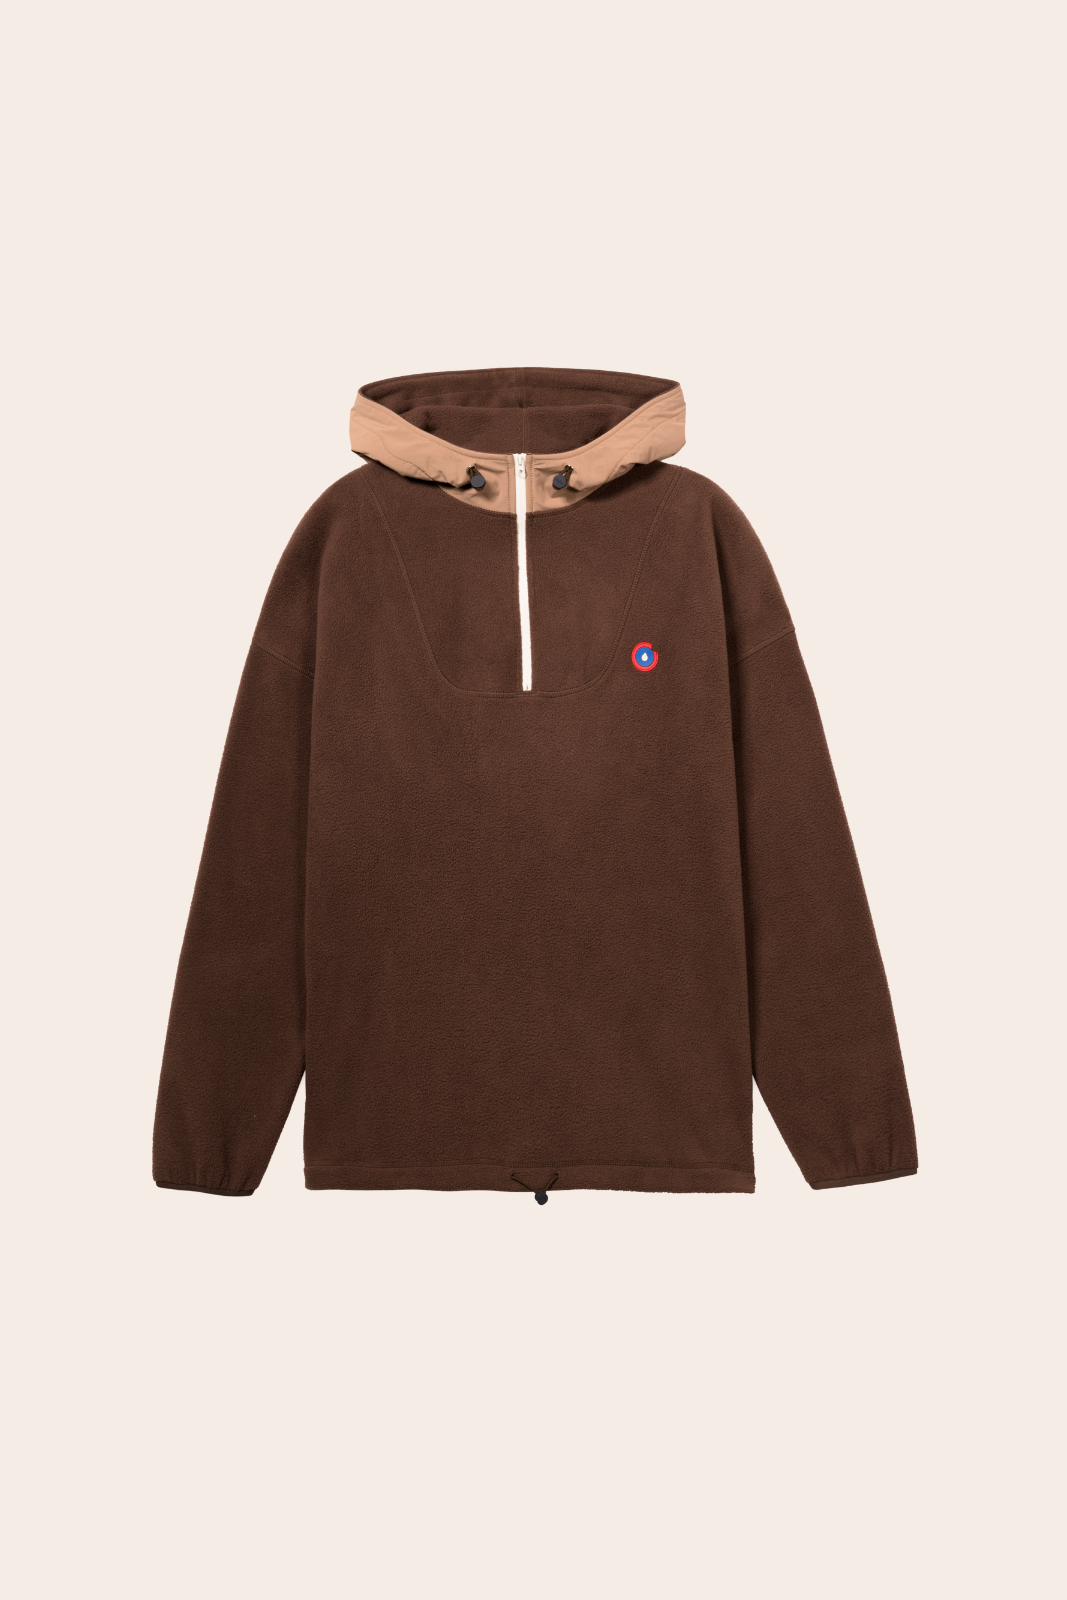 Belleville - Waterproof fleece hoodie - Flotte #couleur_chocolat